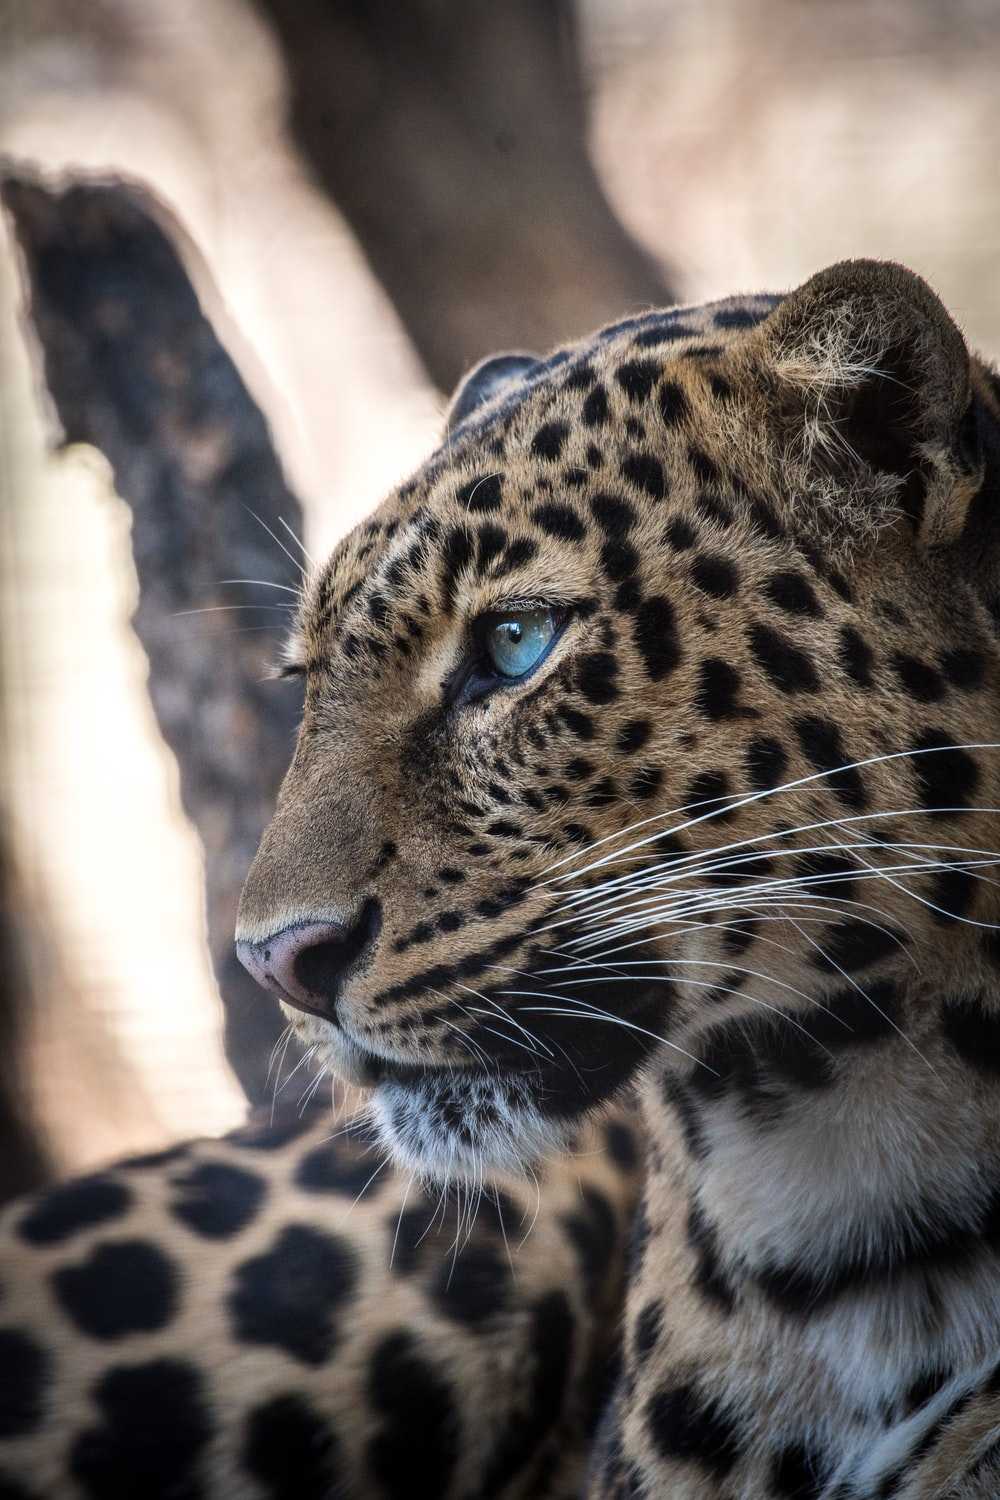 Leopard Background 1